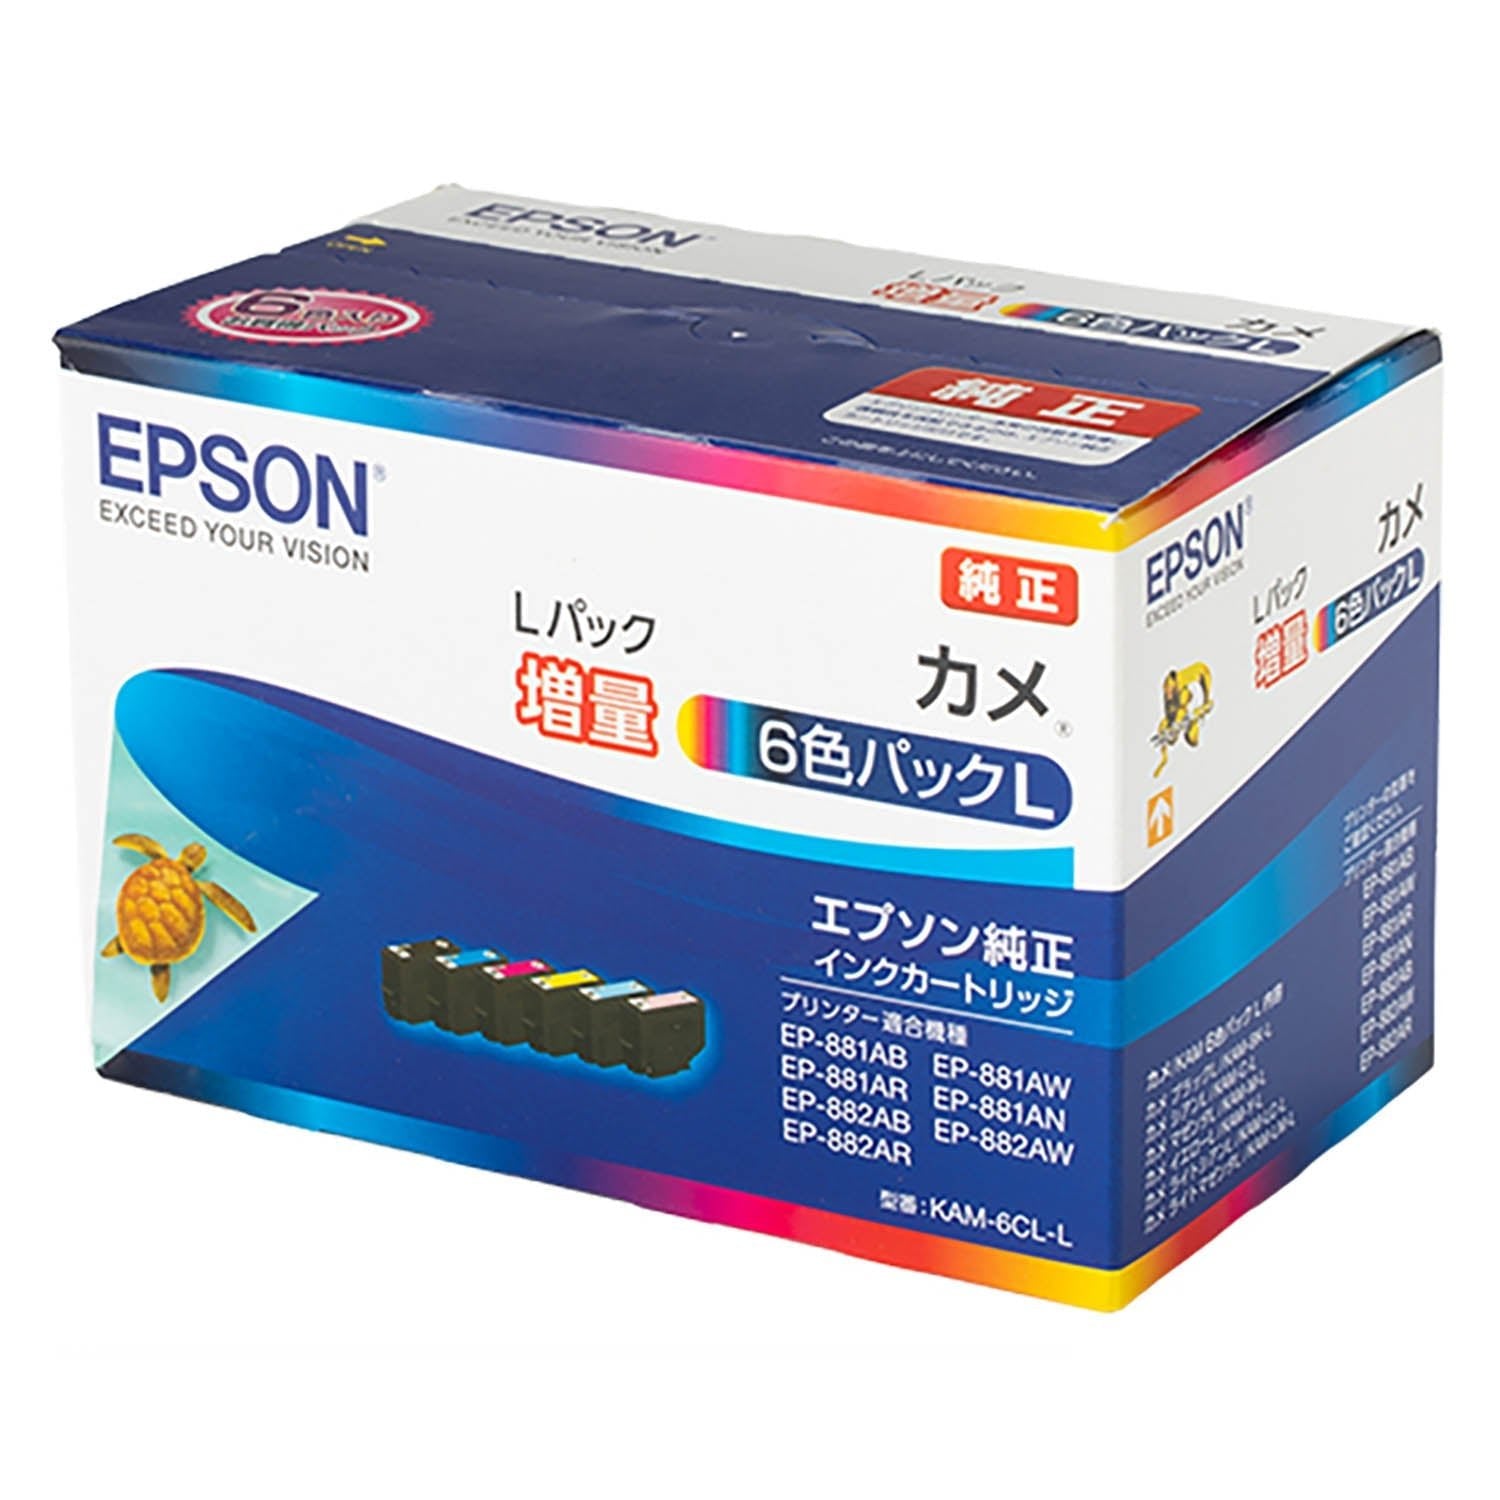 EPSON  純正インクカートリッジ   KAM-6CL-LEPSON